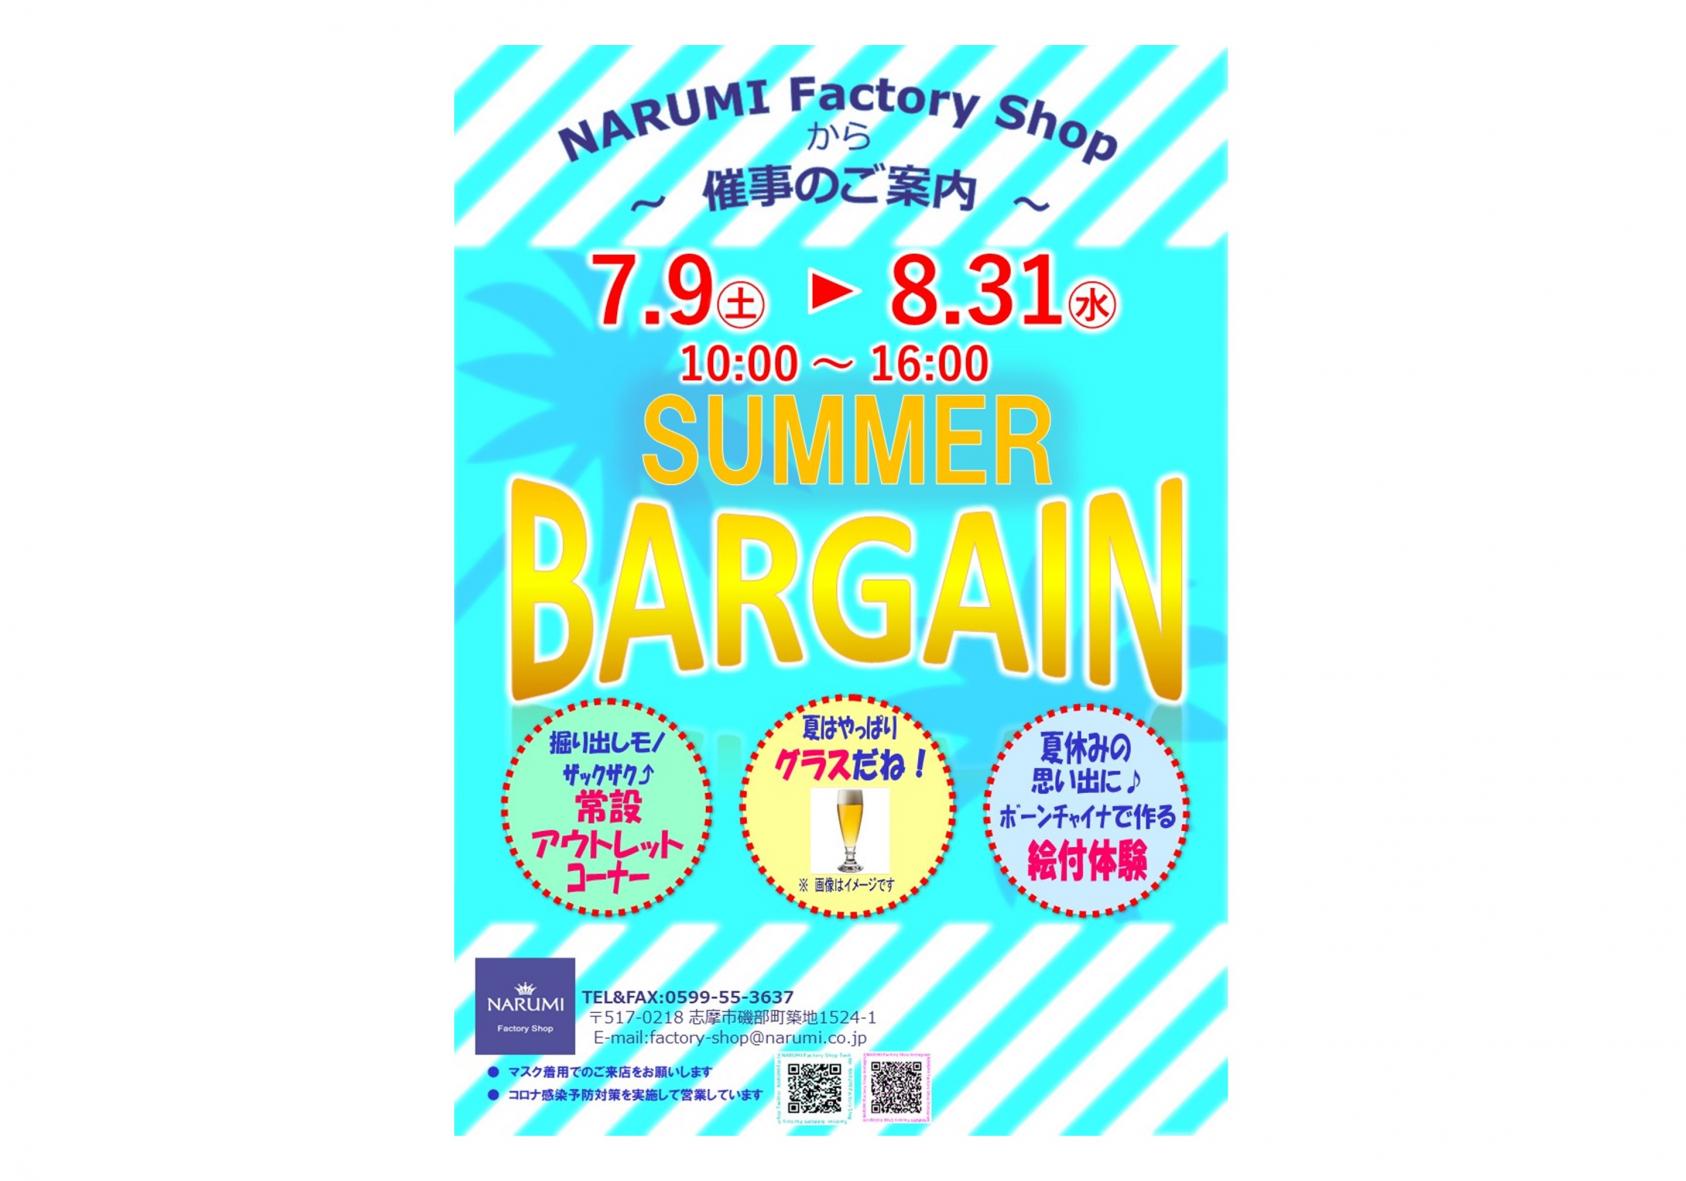 NARUMI Factory Shop - SUMMER BARGAIN --1